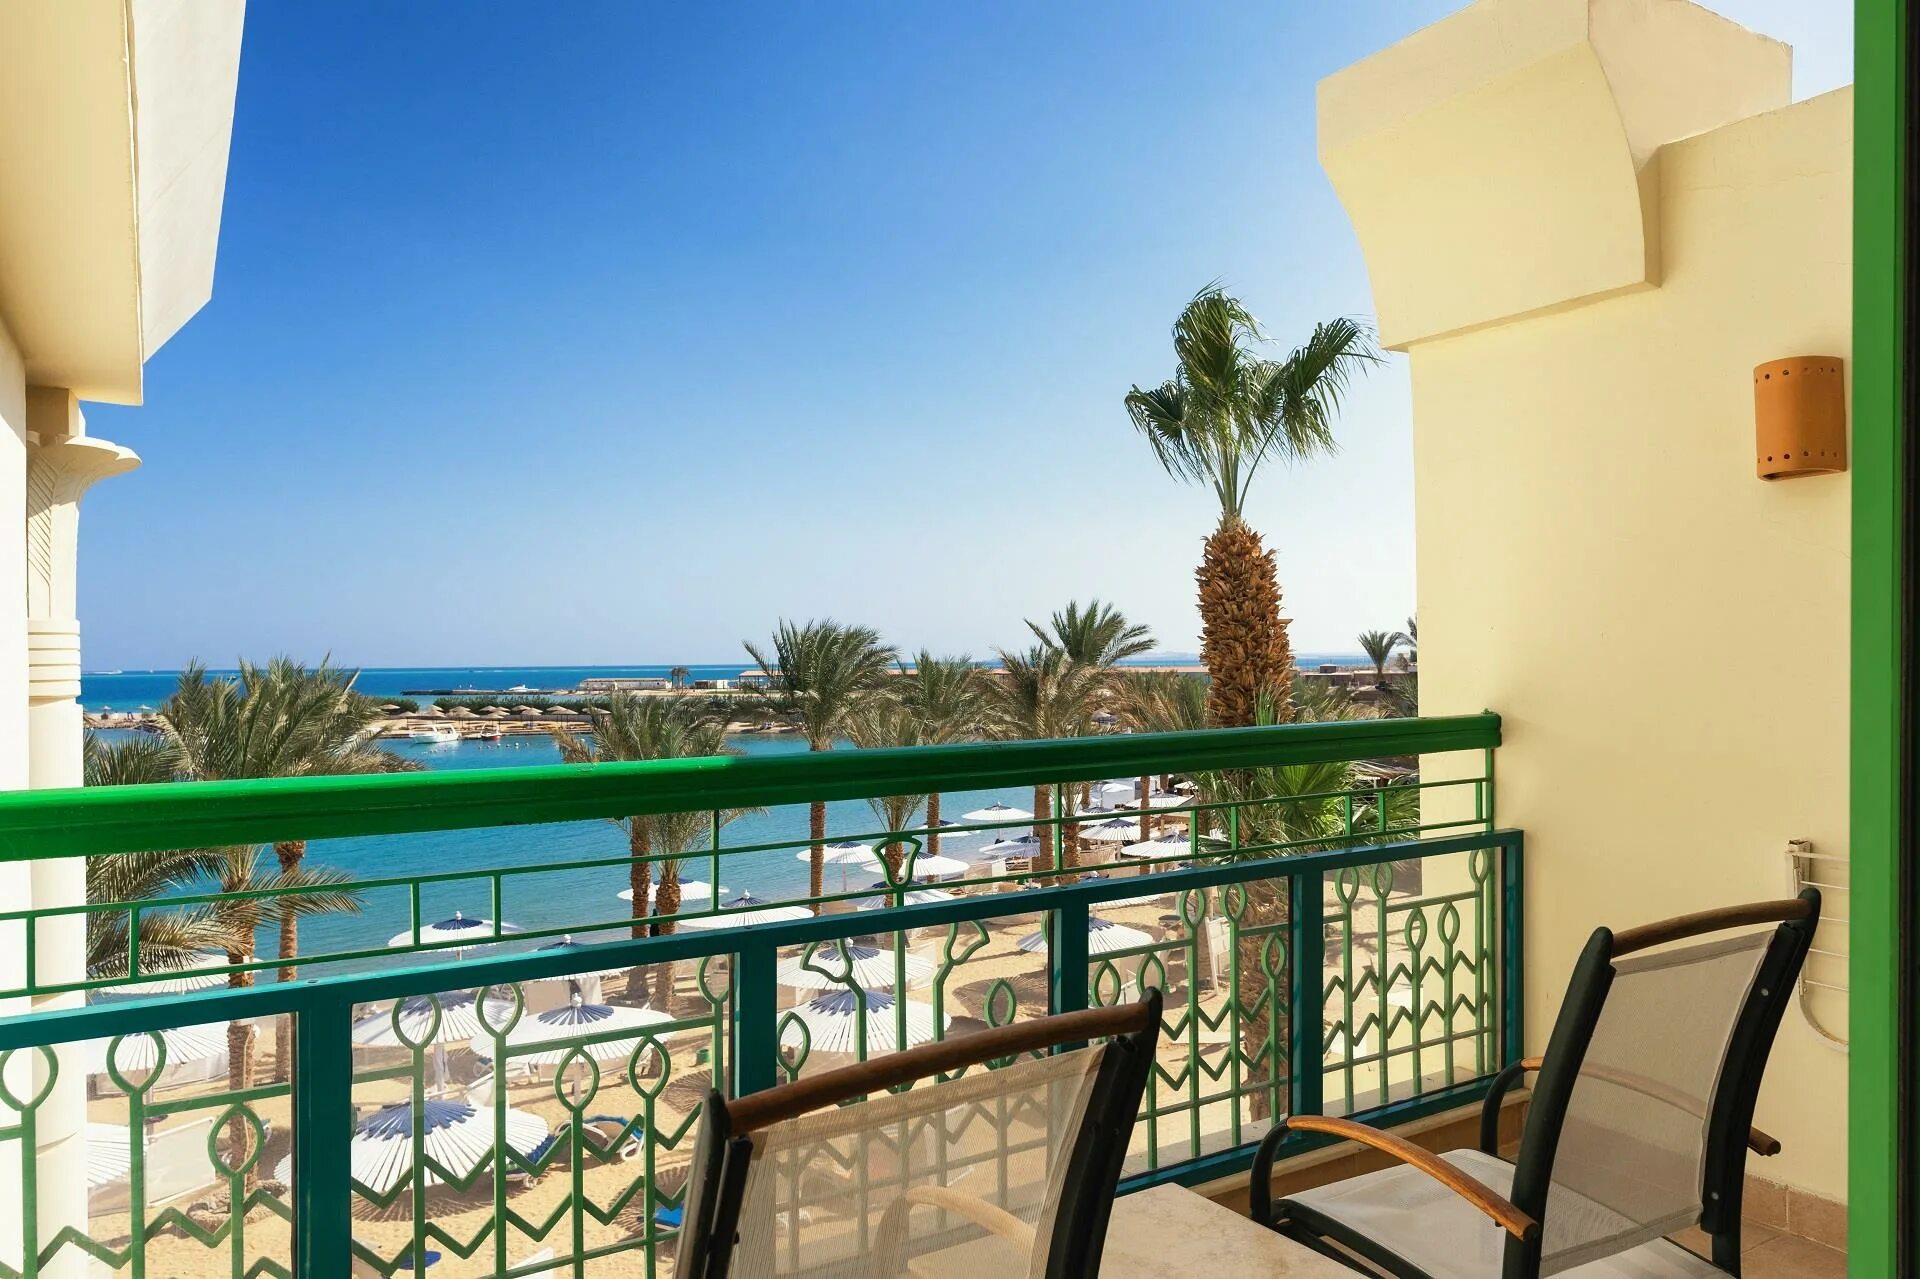 Swiss inn hurghada 5 хургада. Swiss Inn Resort Hurghada 5 Египет. Свисс ИНН Хургада. Swiss in Hurghada 5.